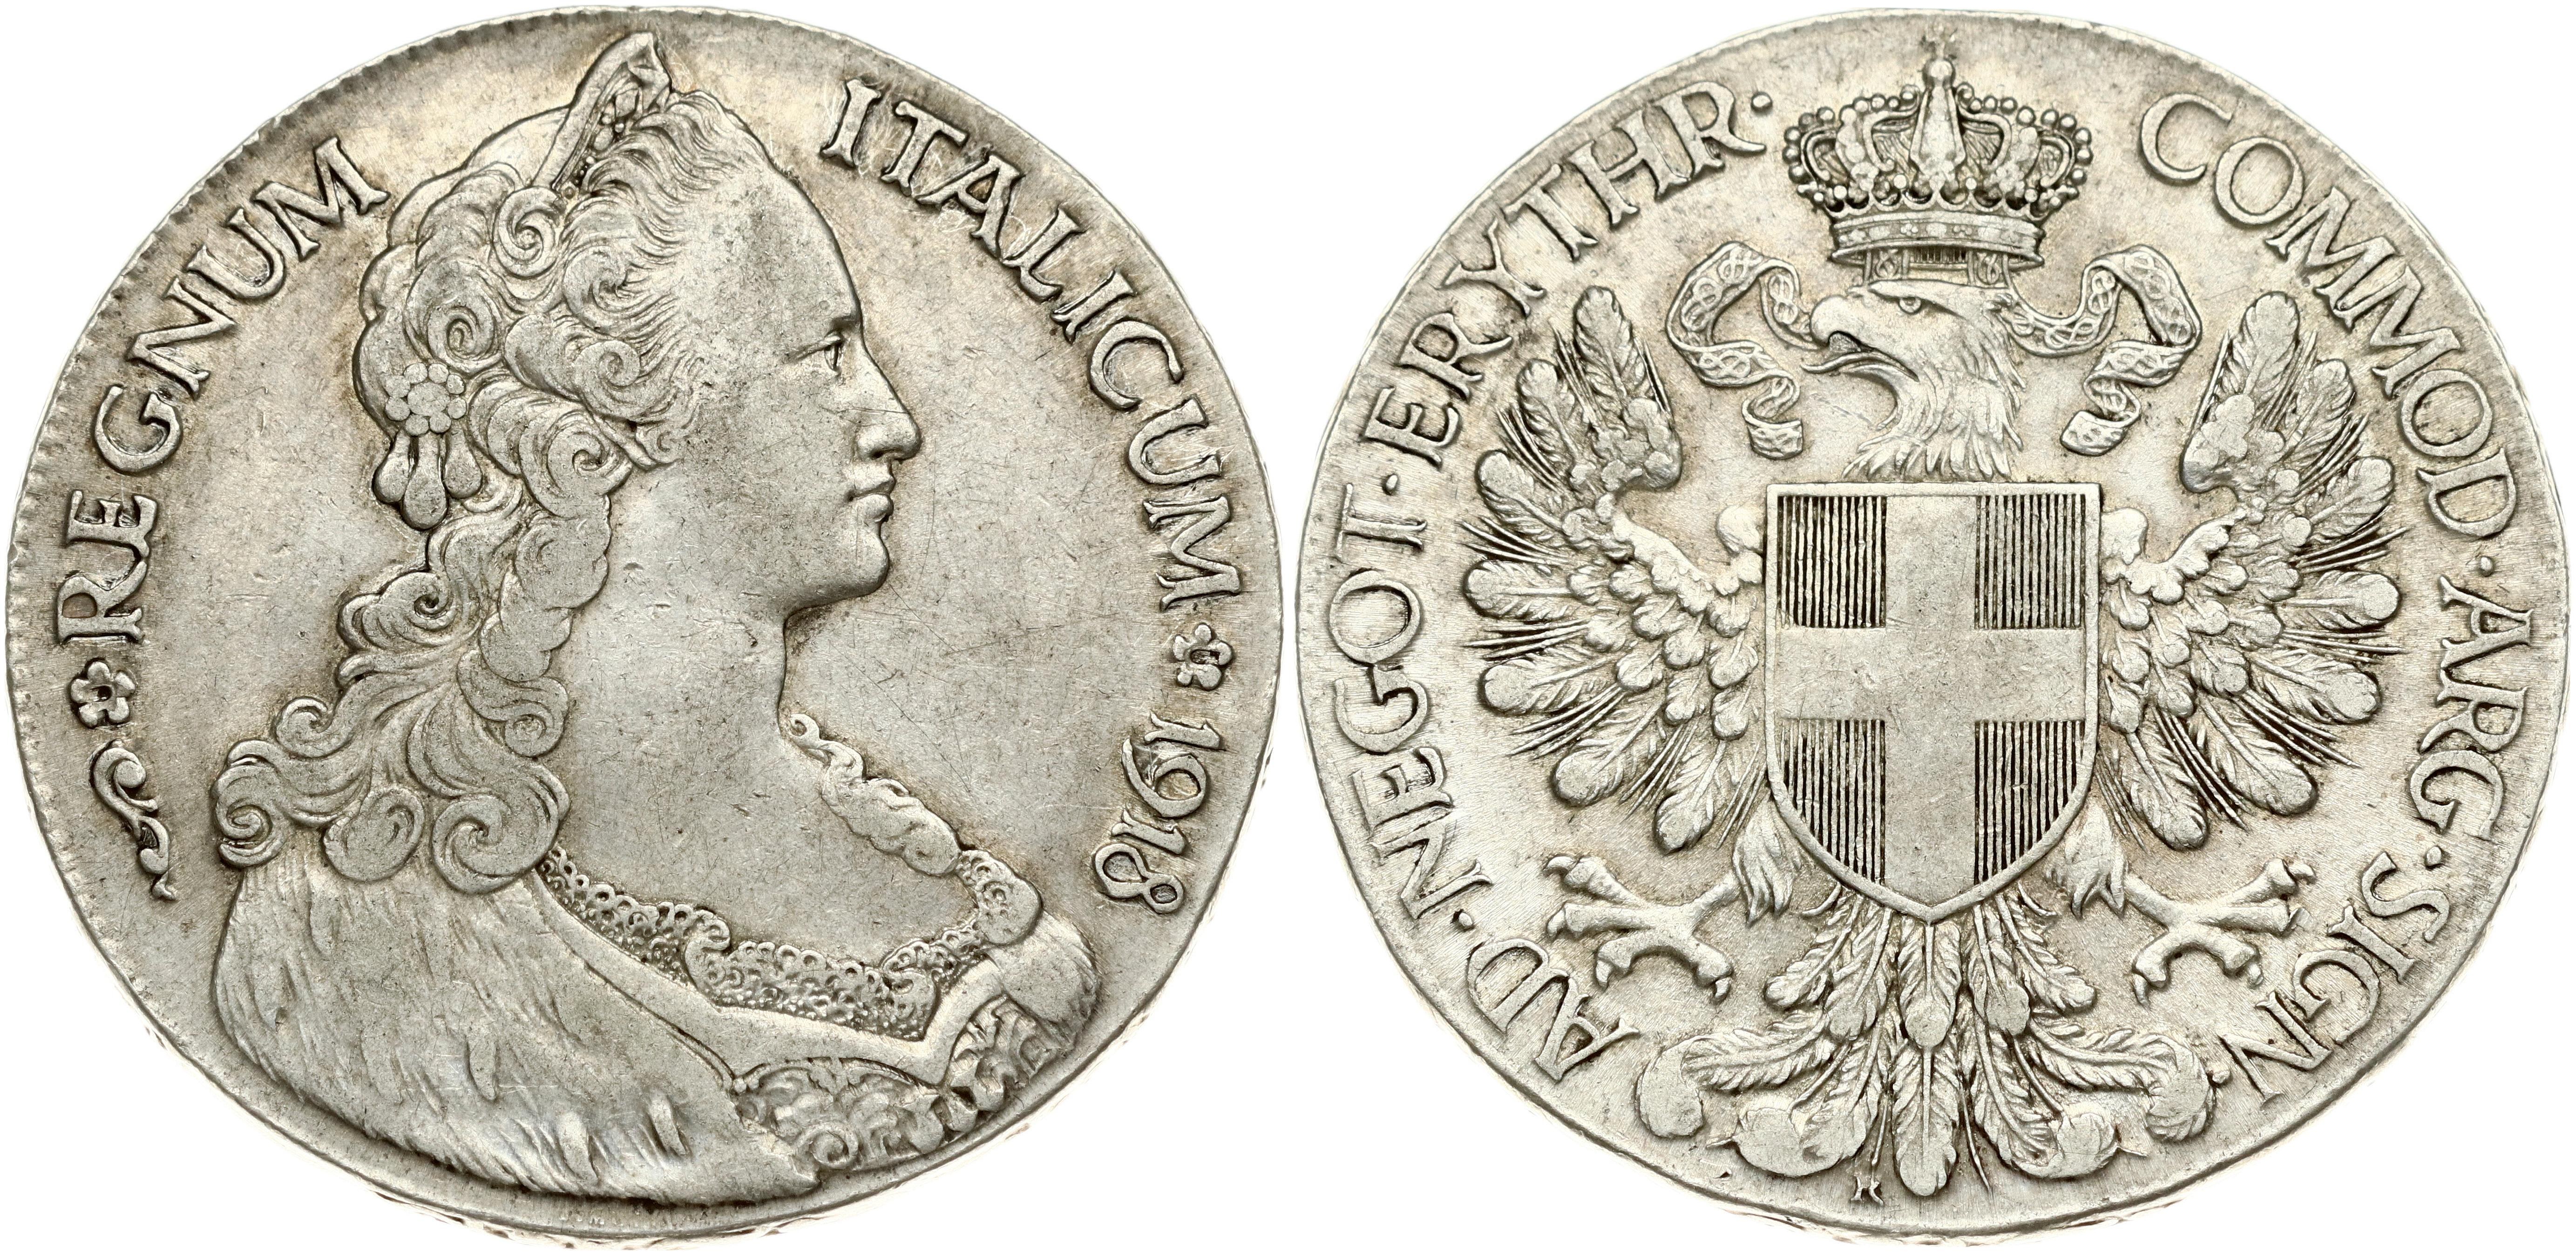 1879 лир. Австрия 1 Союзный талер 1868. Монета Рагуза 1646. Австрийская монета талер. Талер монета серебро.